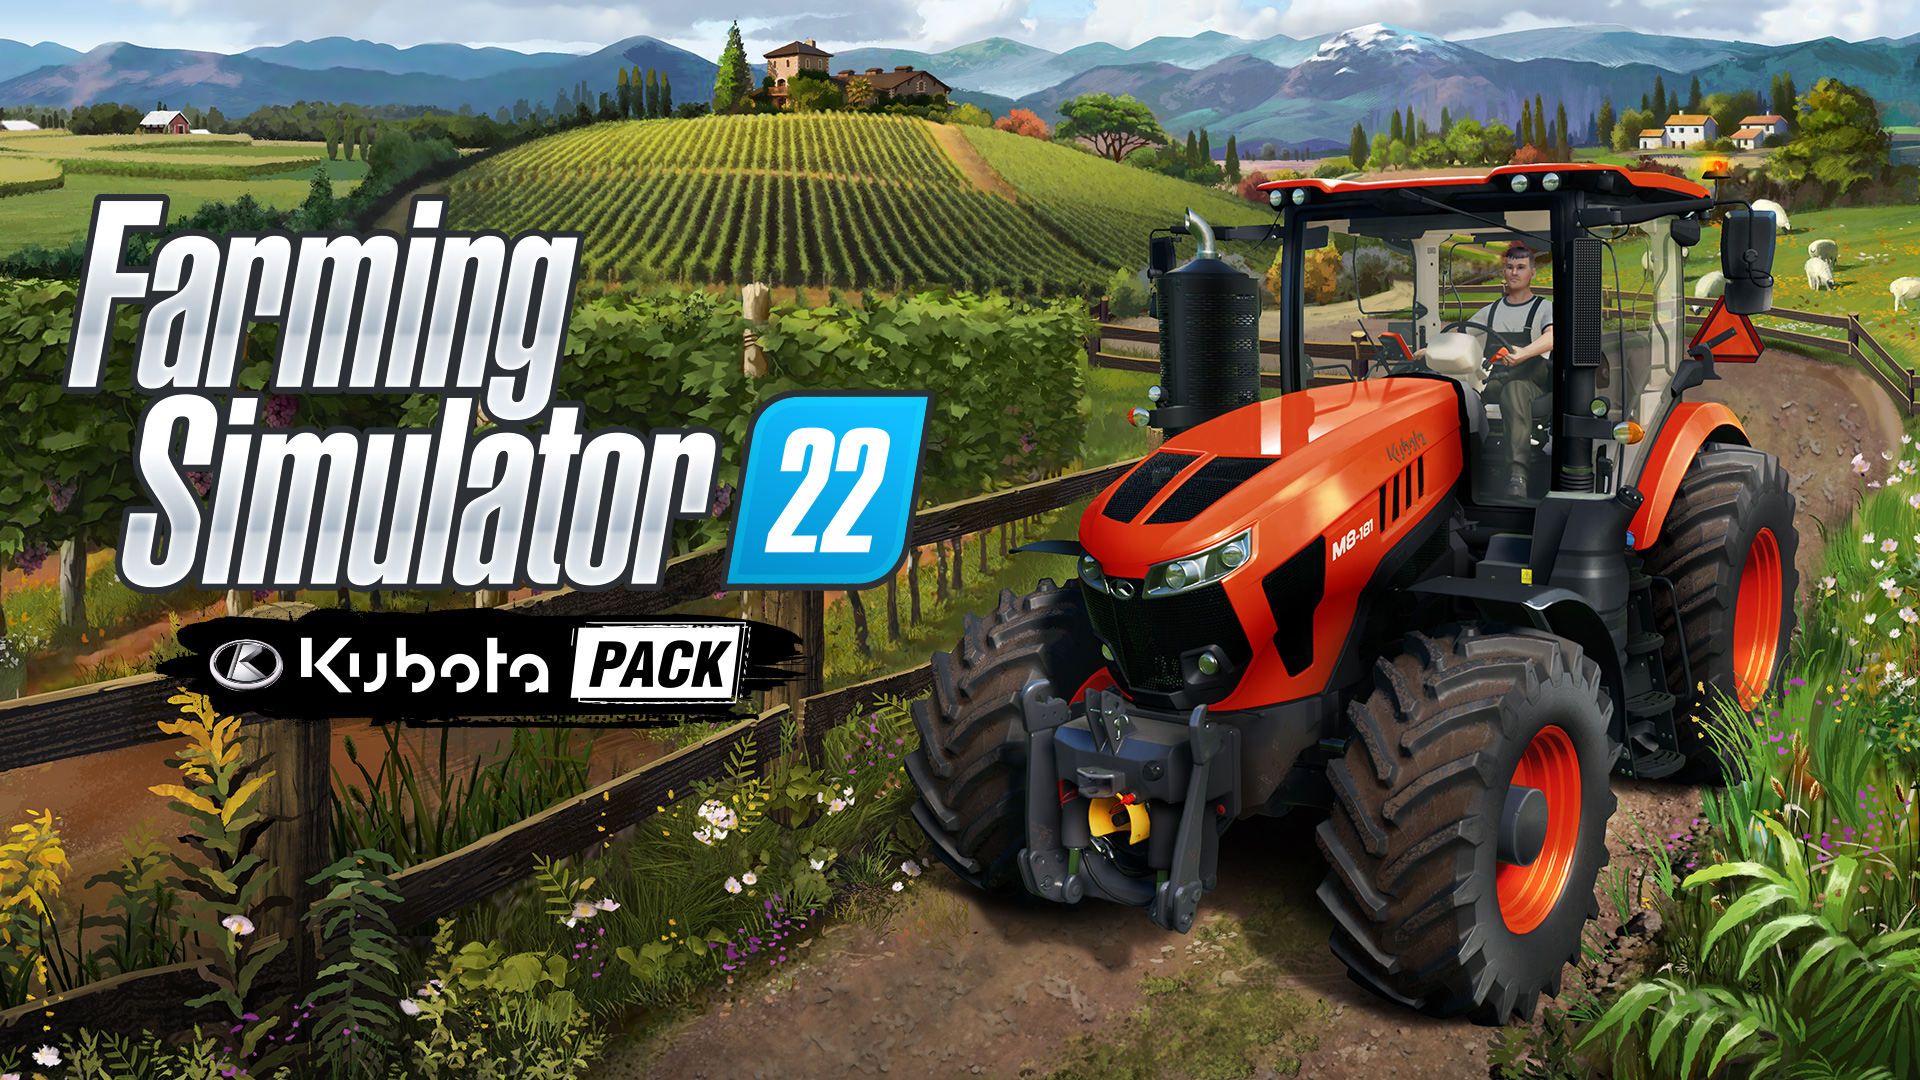 Farming Simulator 22 In Arrivo Il Kubota Pack Nerdpool 7511